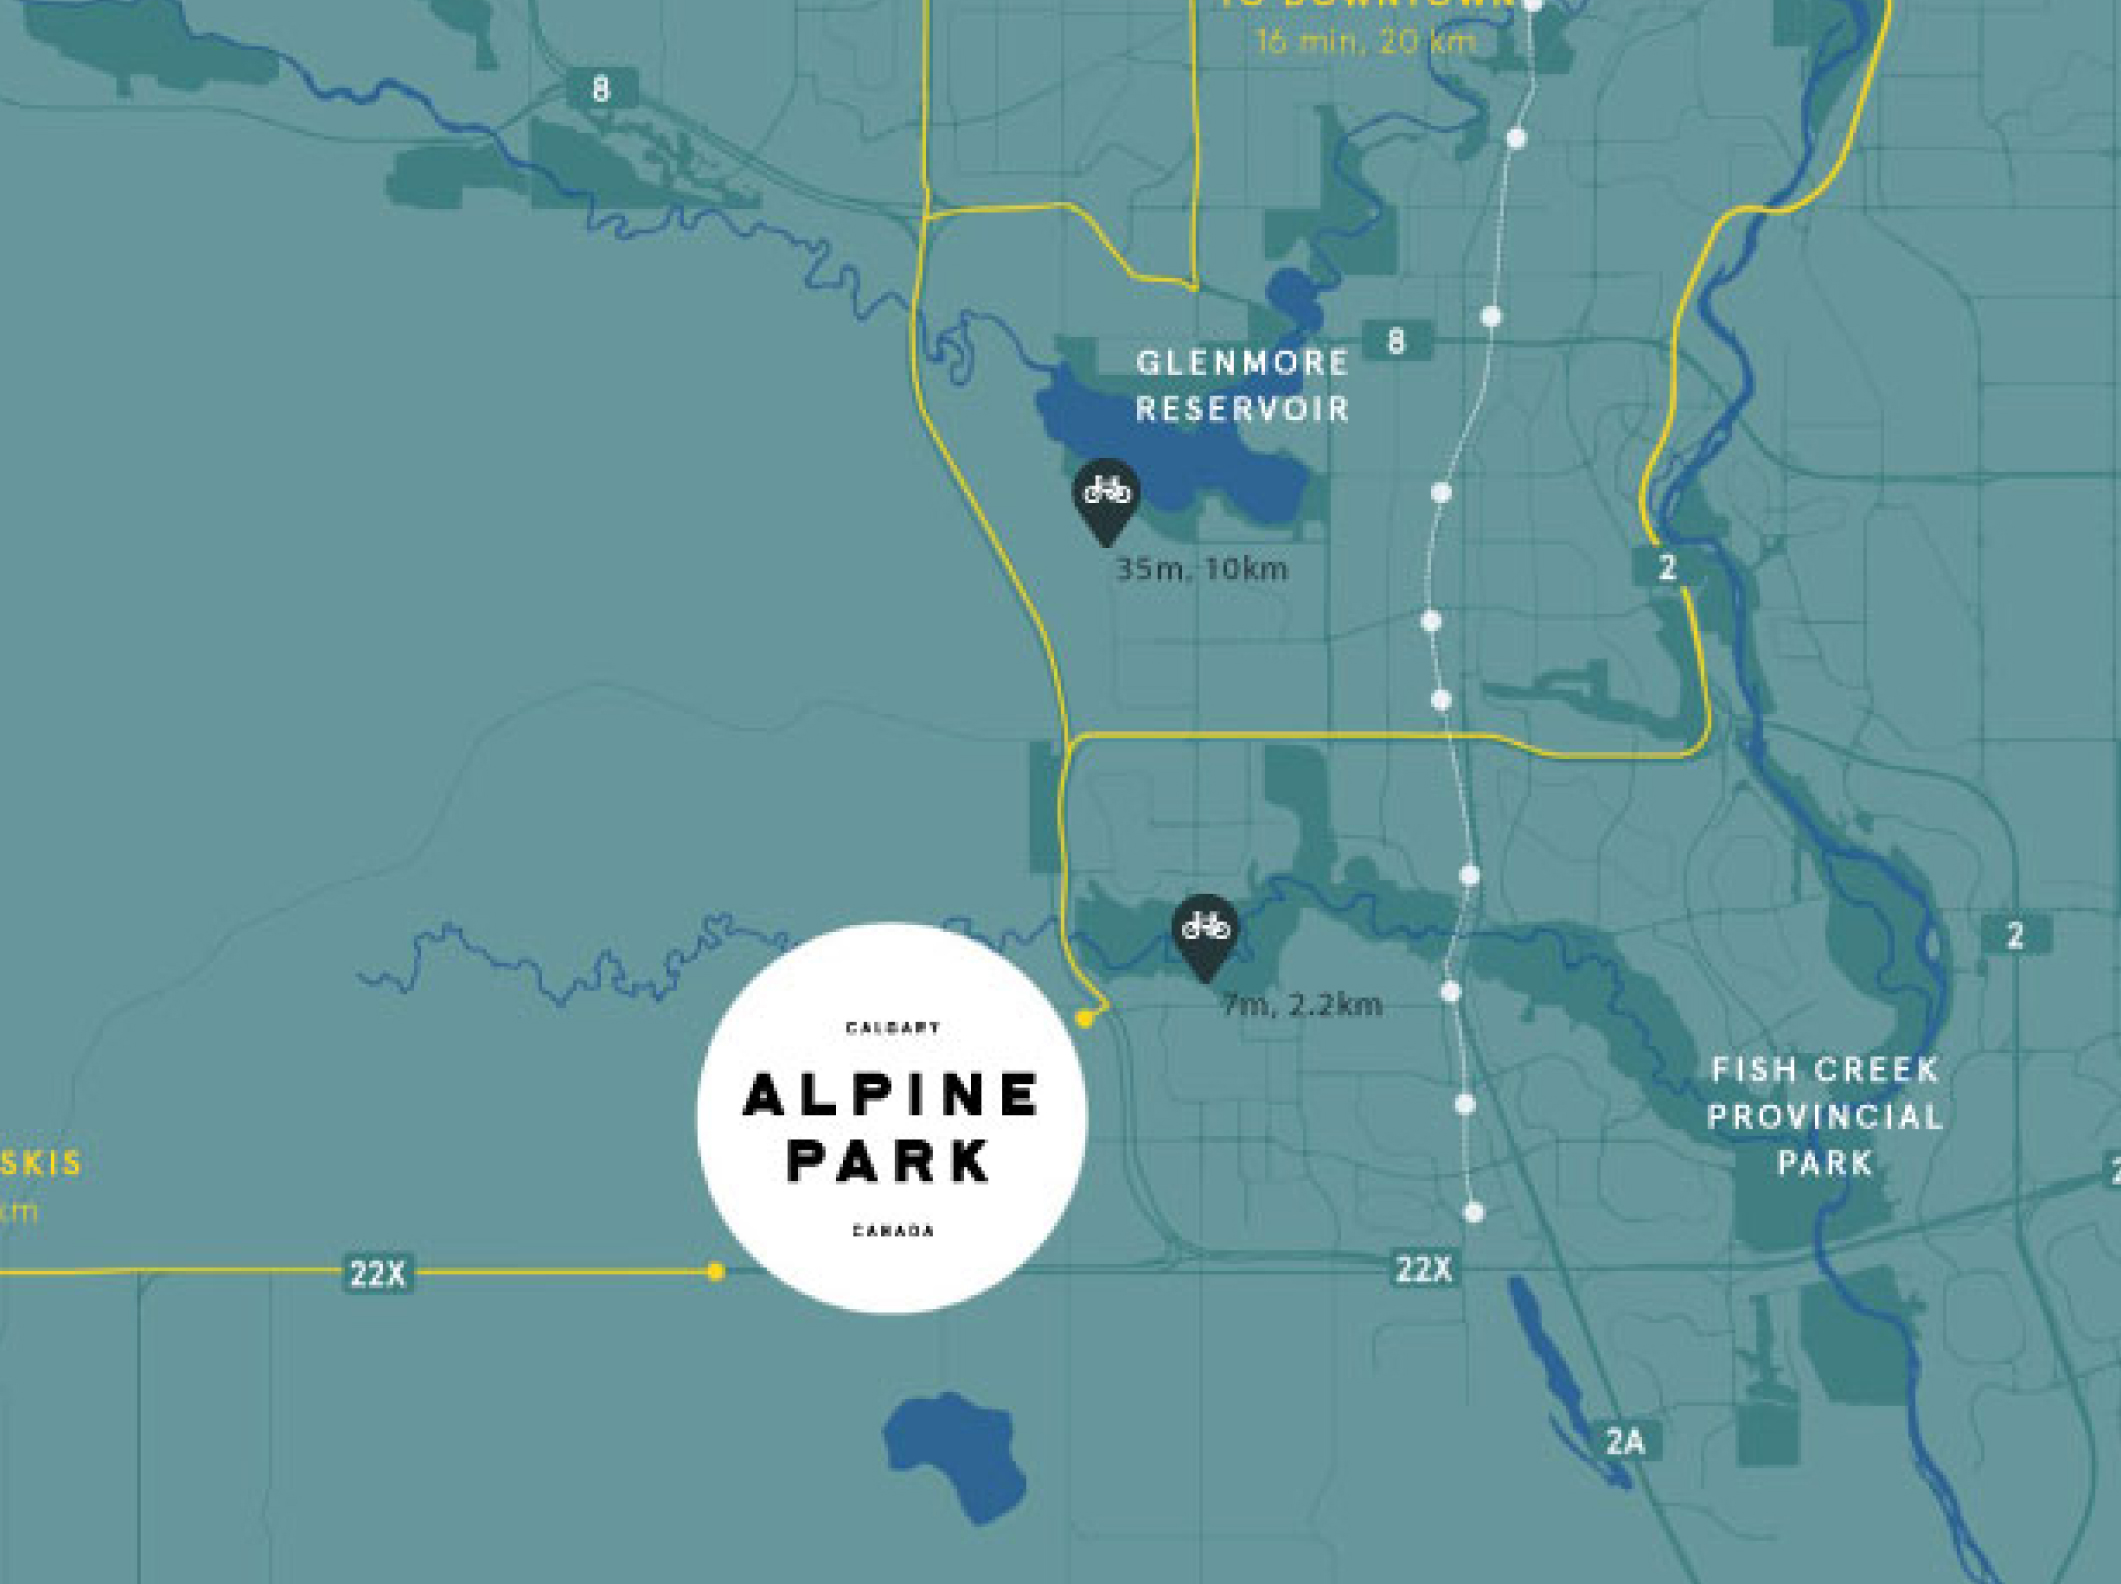 A map of alpine park